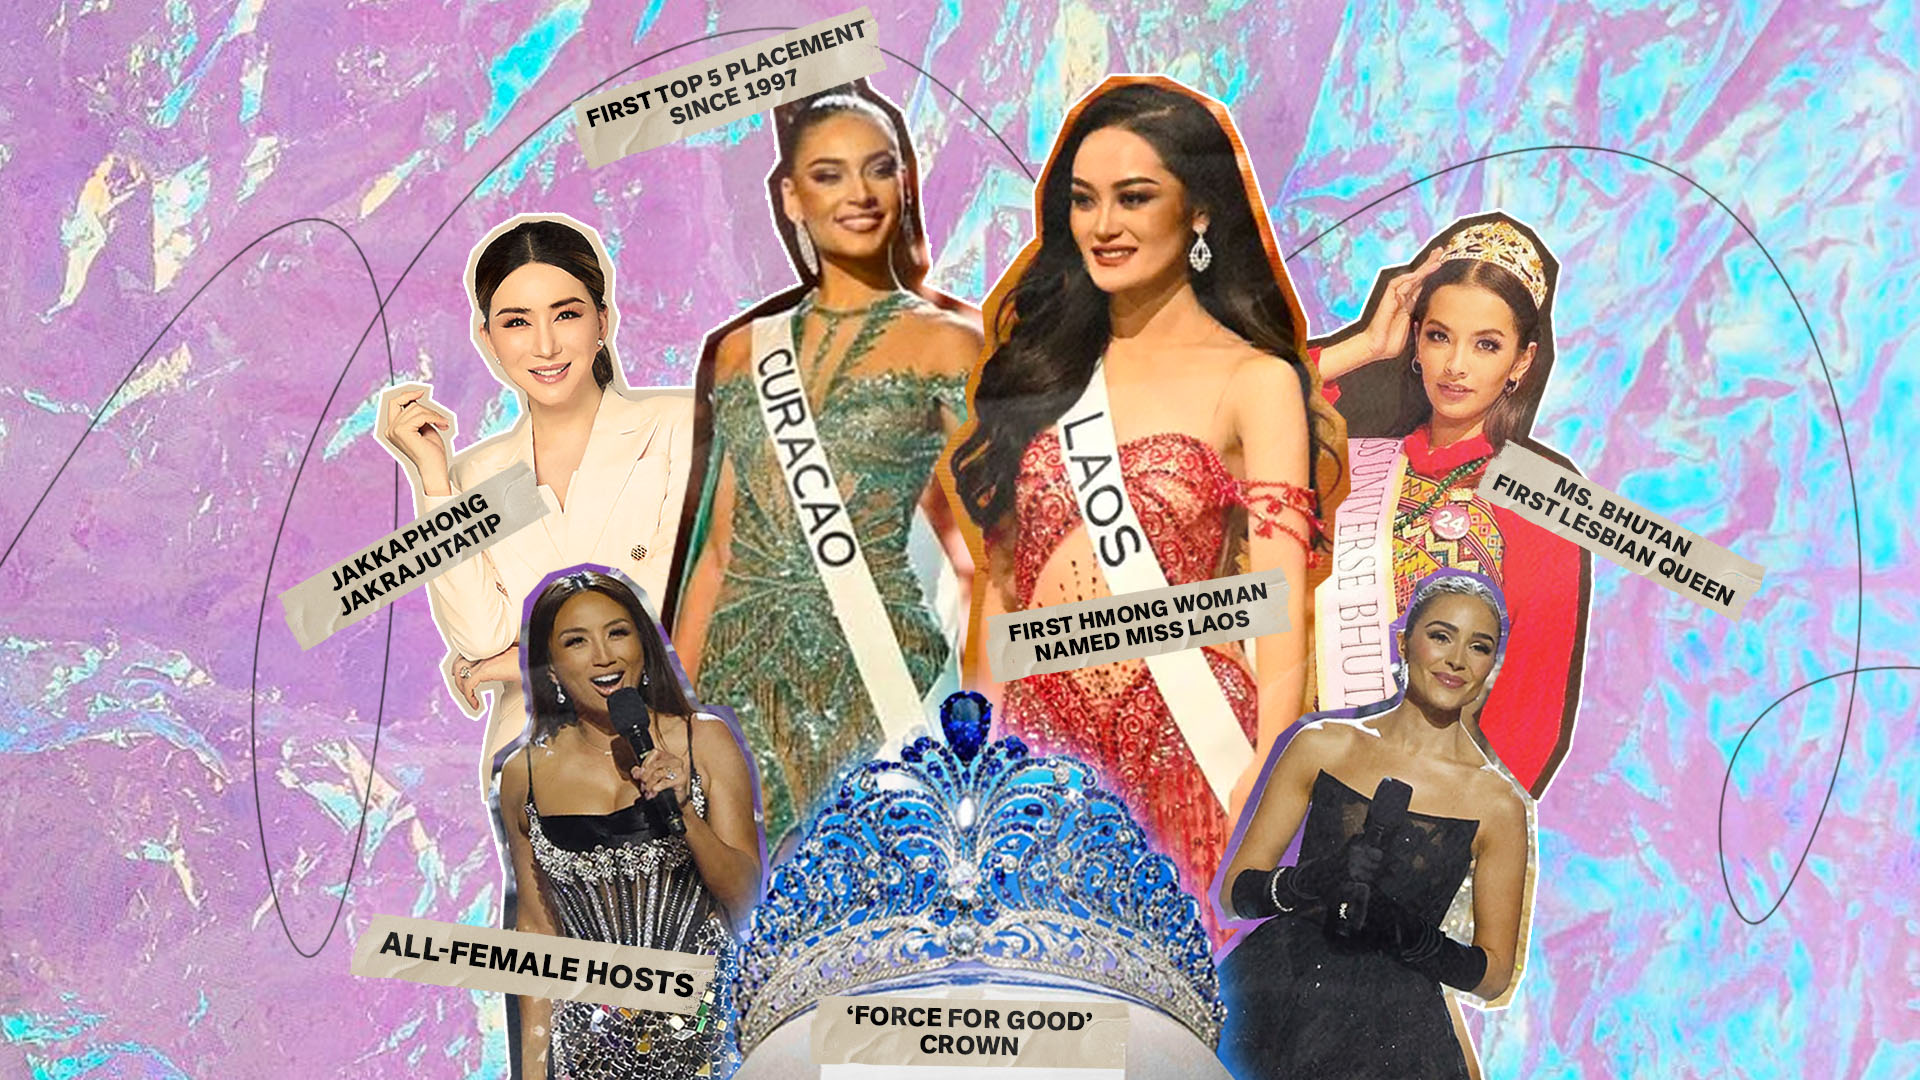 5 Caribbean queens make Miss Universe Top 16